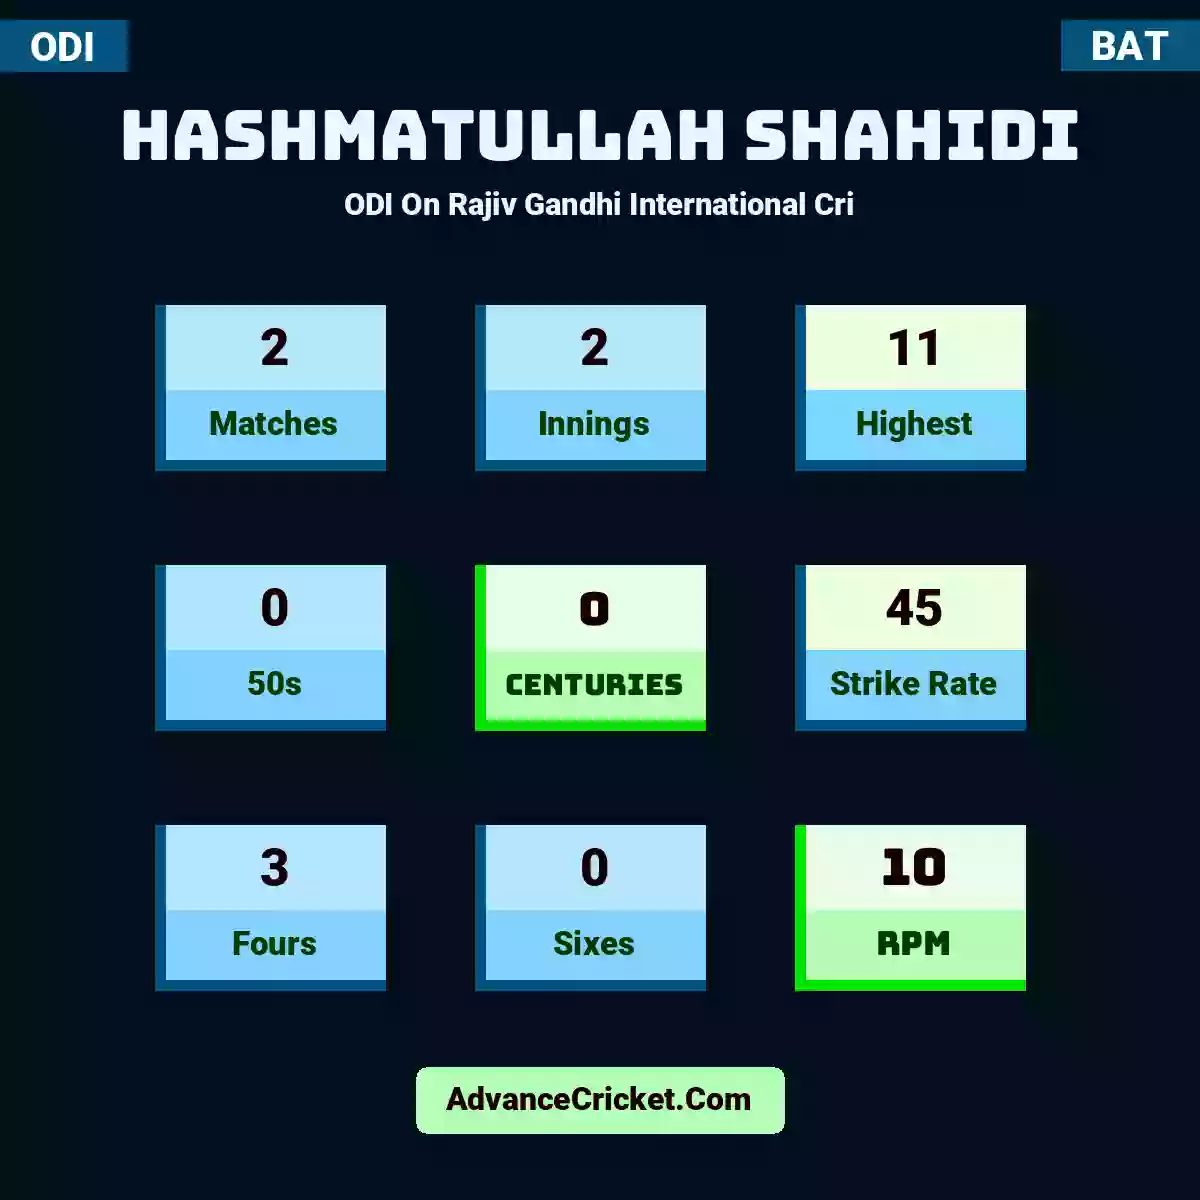 Hashmatullah Shahidi ODI  On Rajiv Gandhi International Cri, Hashmatullah Shahidi played 2 matches, scored 11 runs as highest, 0 half-centuries, and 0 centuries, with a strike rate of 45. H.Shahidi hit 3 fours and 0 sixes, with an RPM of 10.